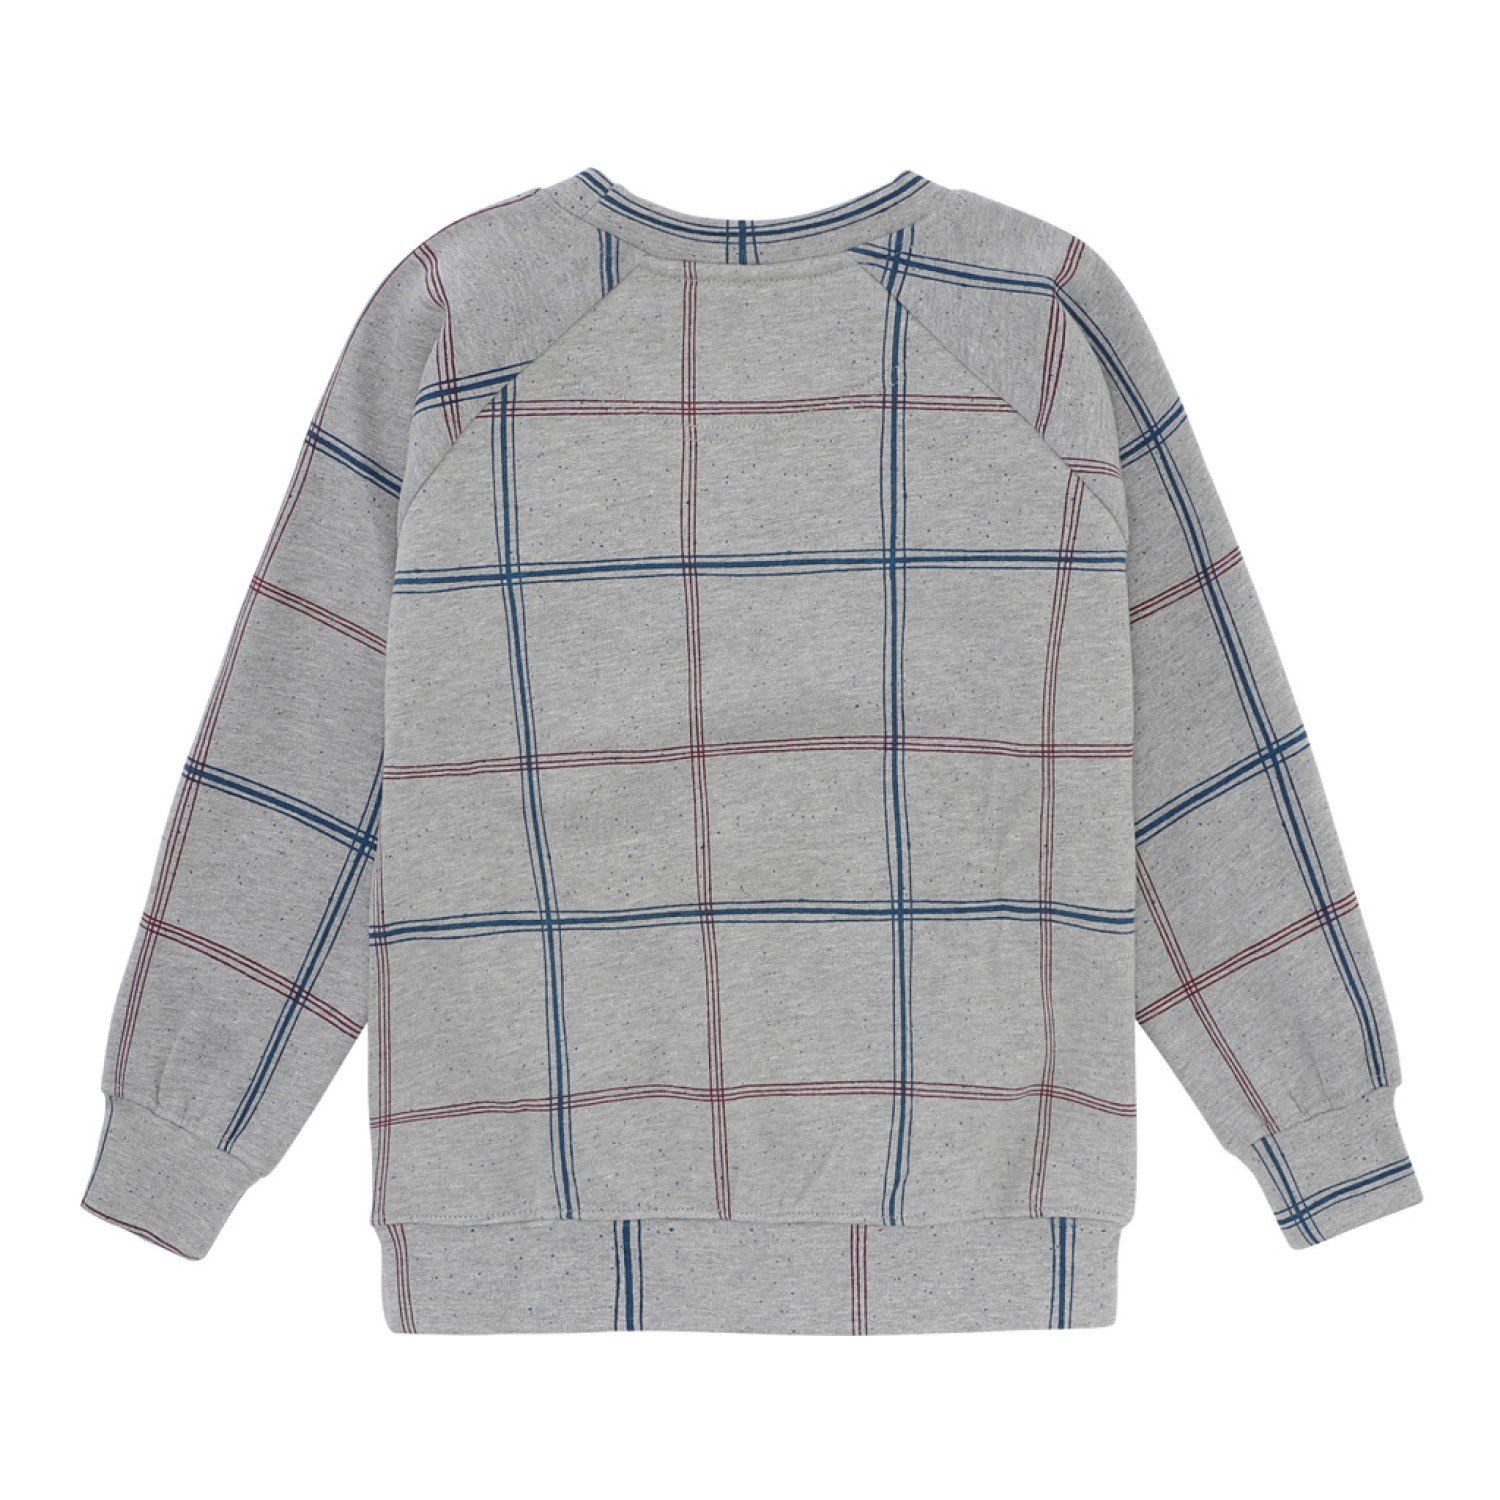 Chaz Sweatshirt SOFT GALLERY | Grey Melange